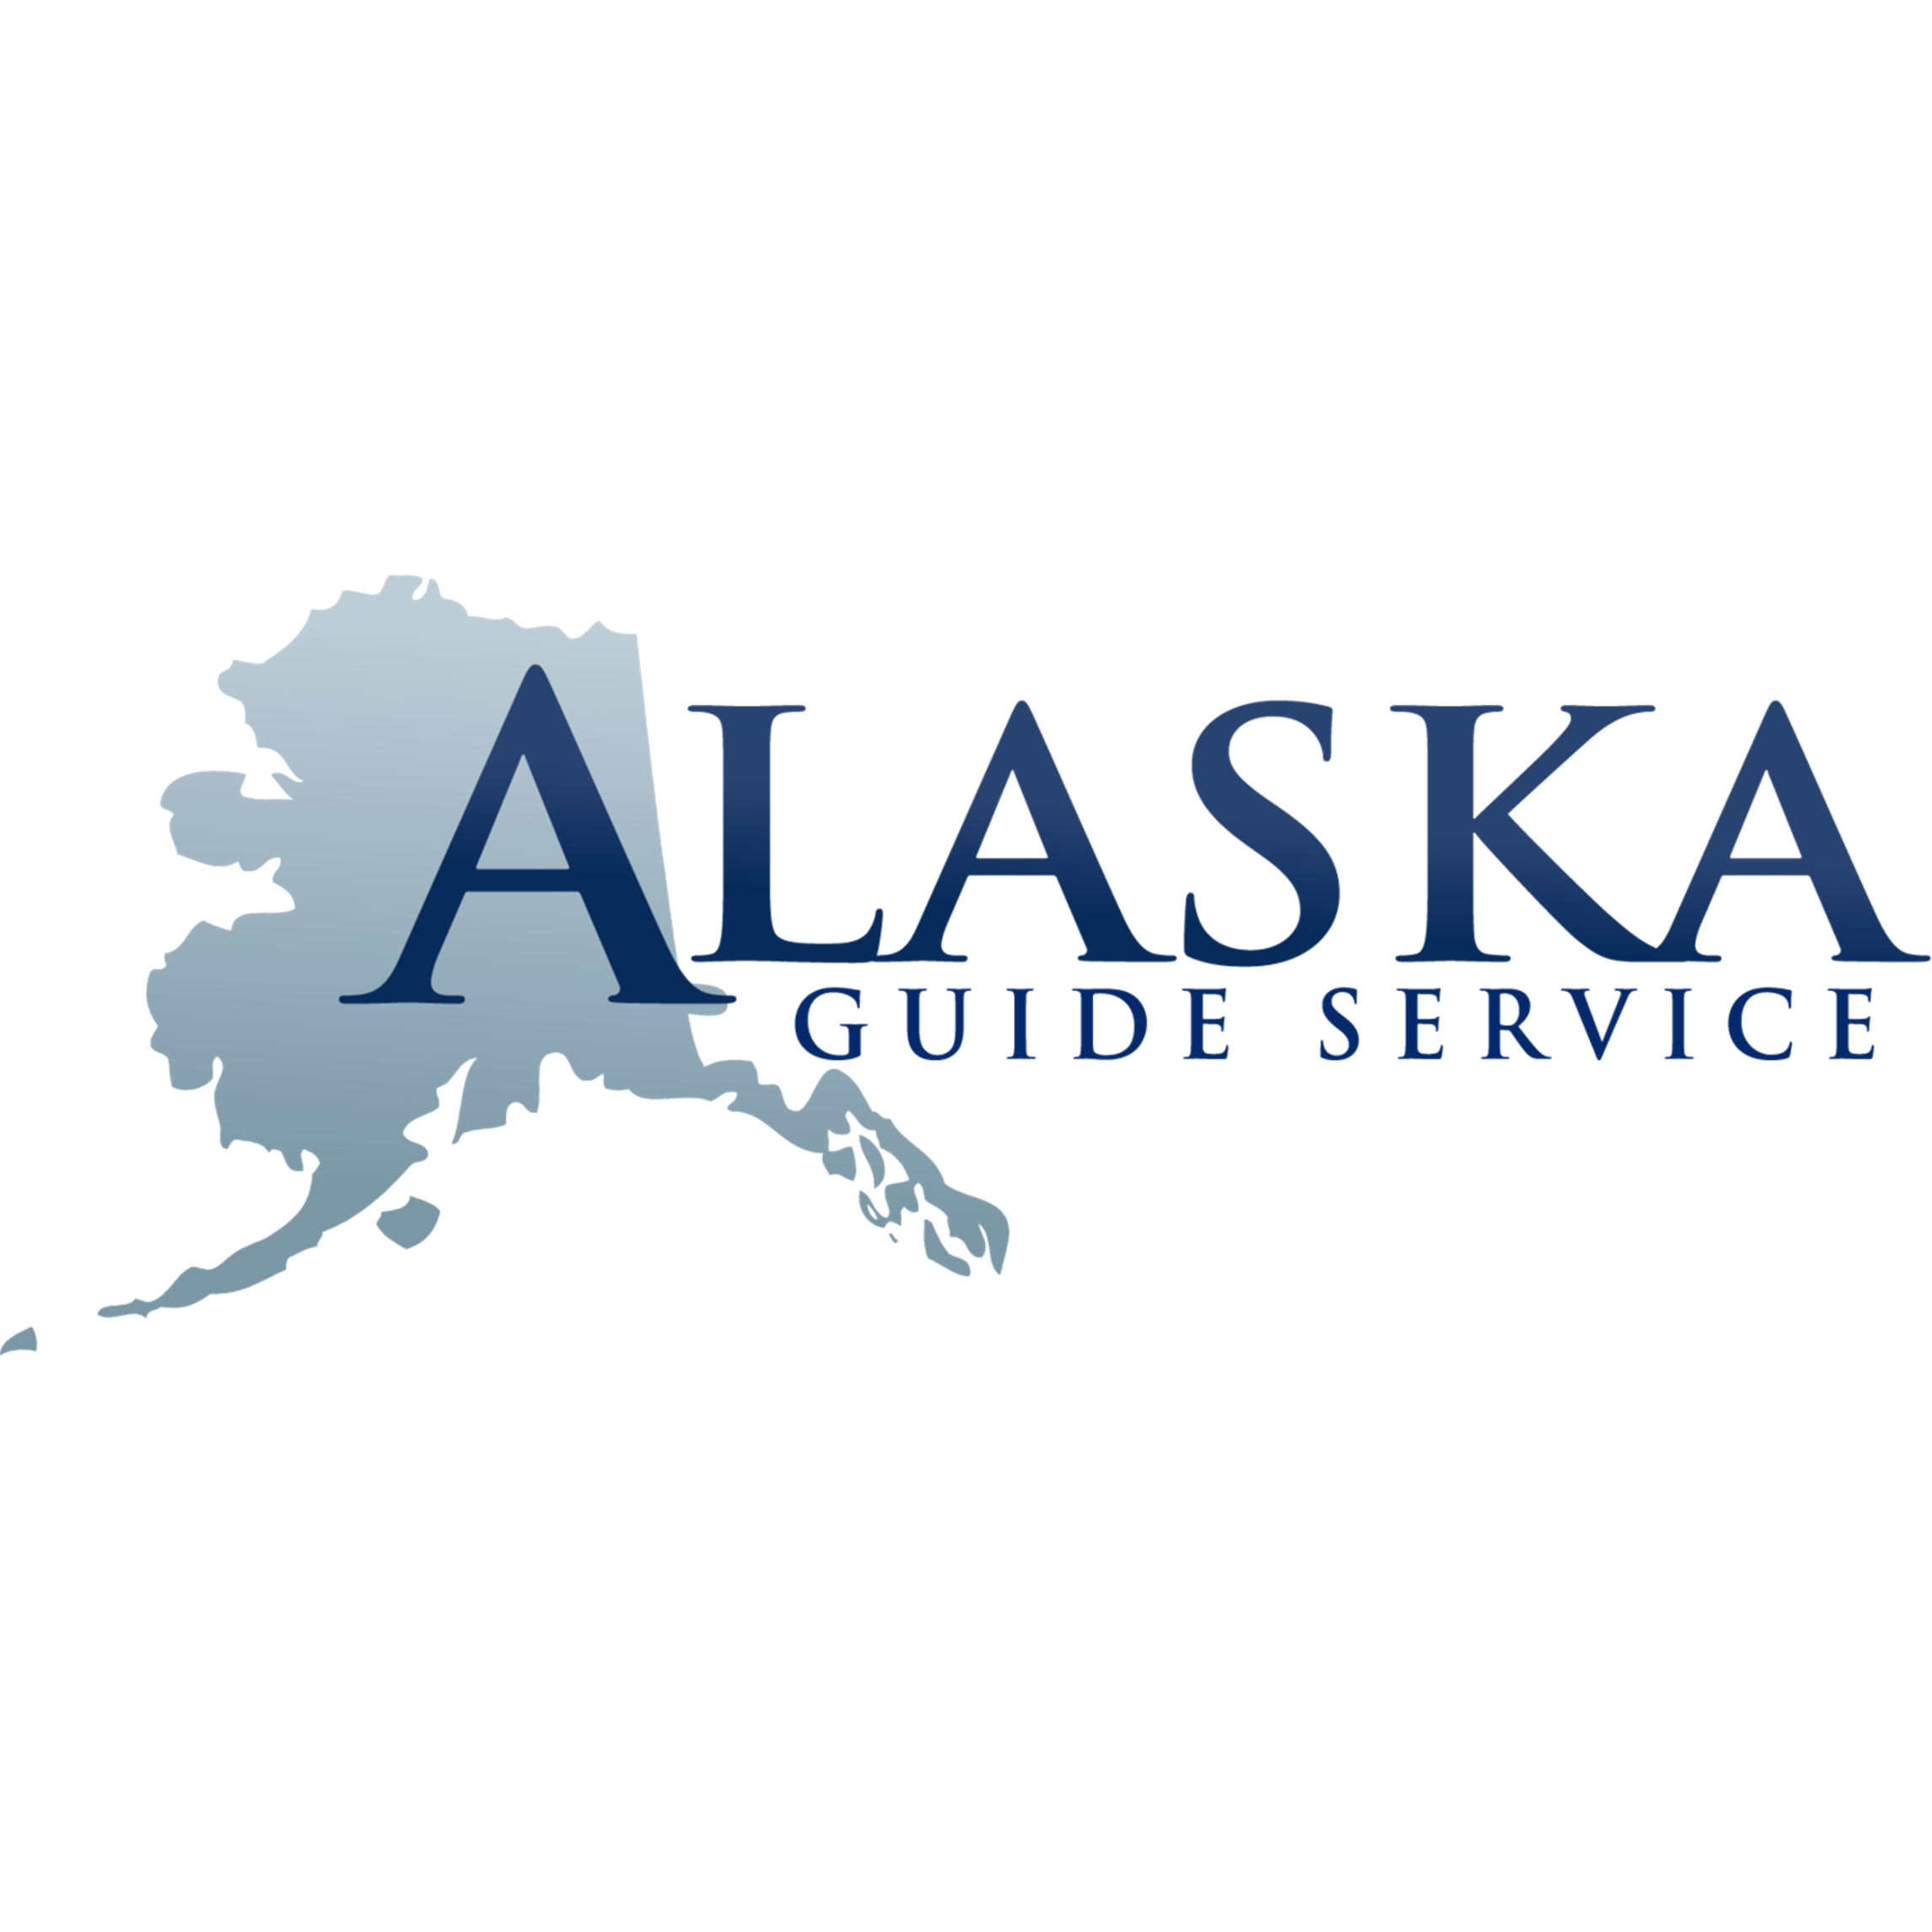 Alaska Guide Service